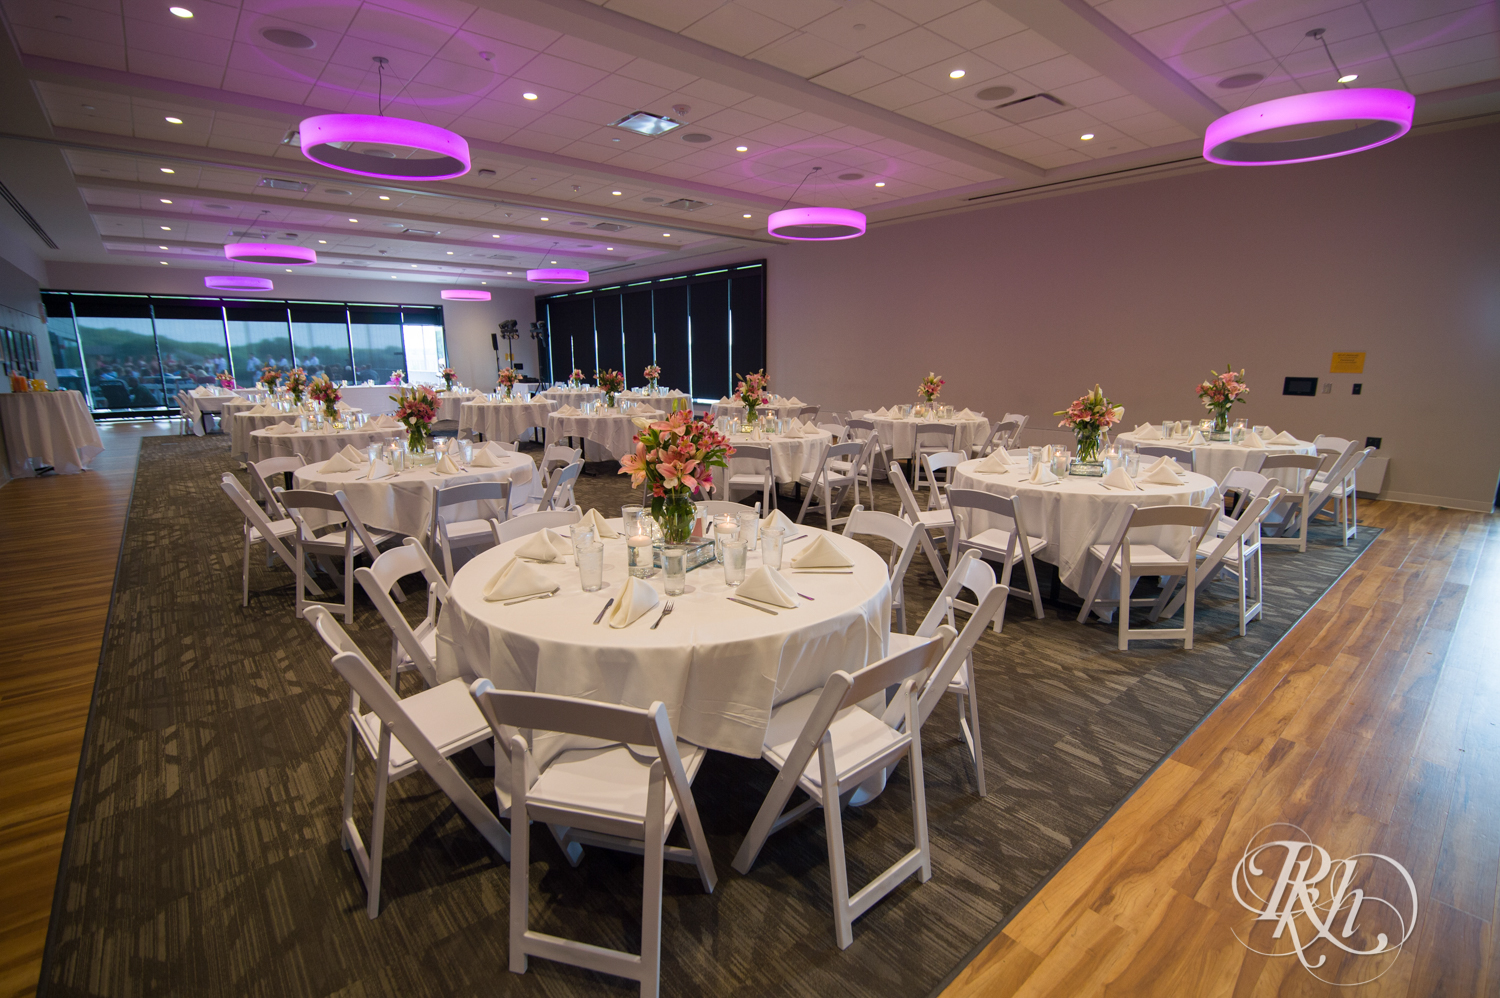 Indoor summer wedding reception setup at Brookview Golf Course in Golden Valley, Minnesota.